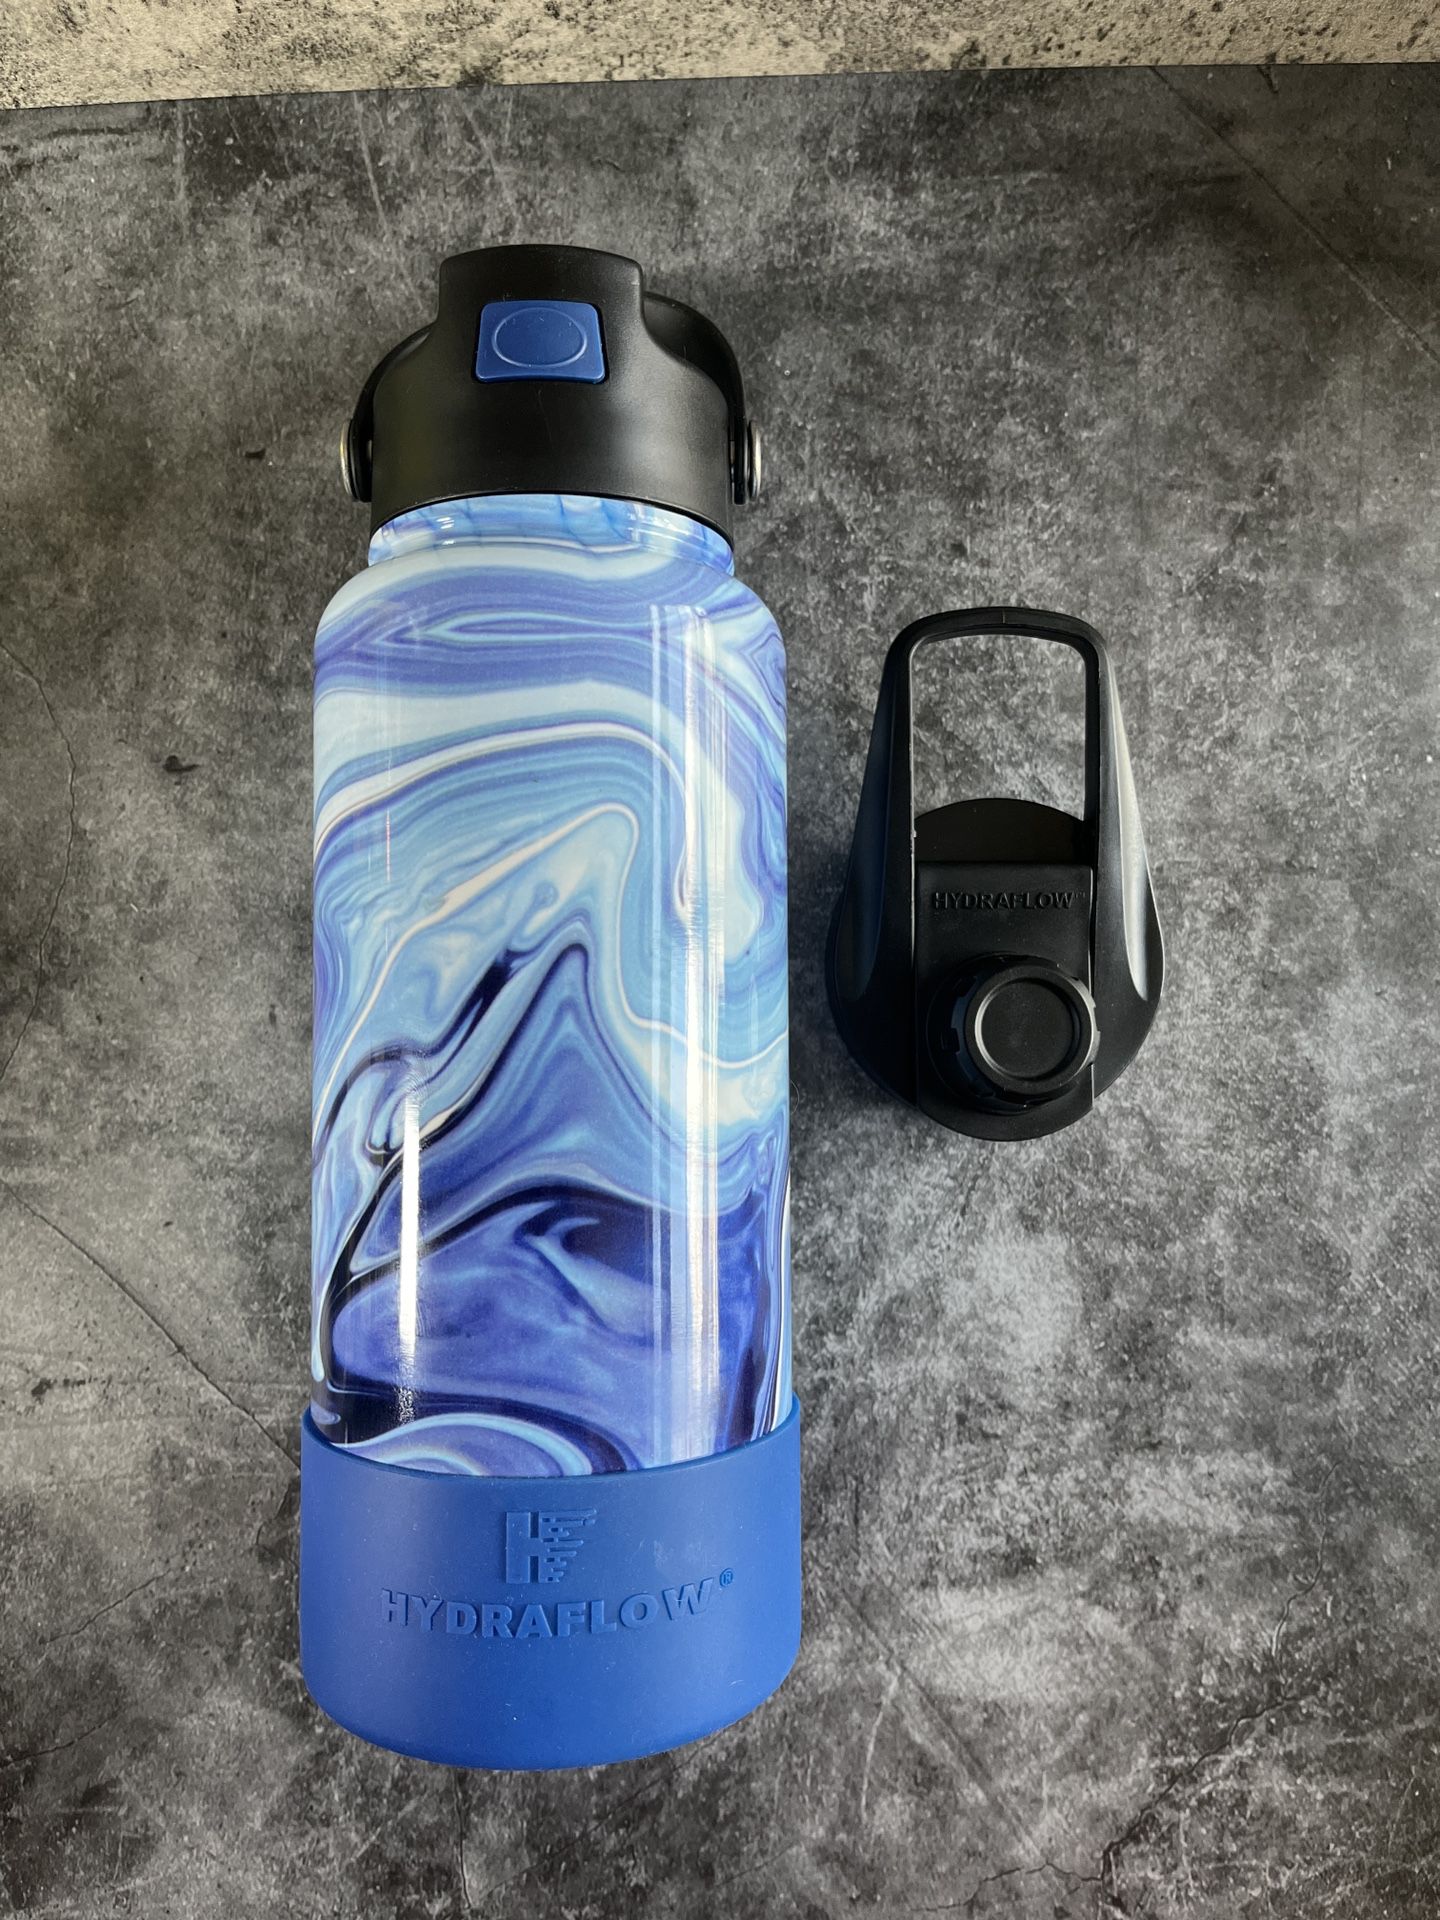 Hydrapeak Voyager Bottle for Sale in Stamford, CT - OfferUp